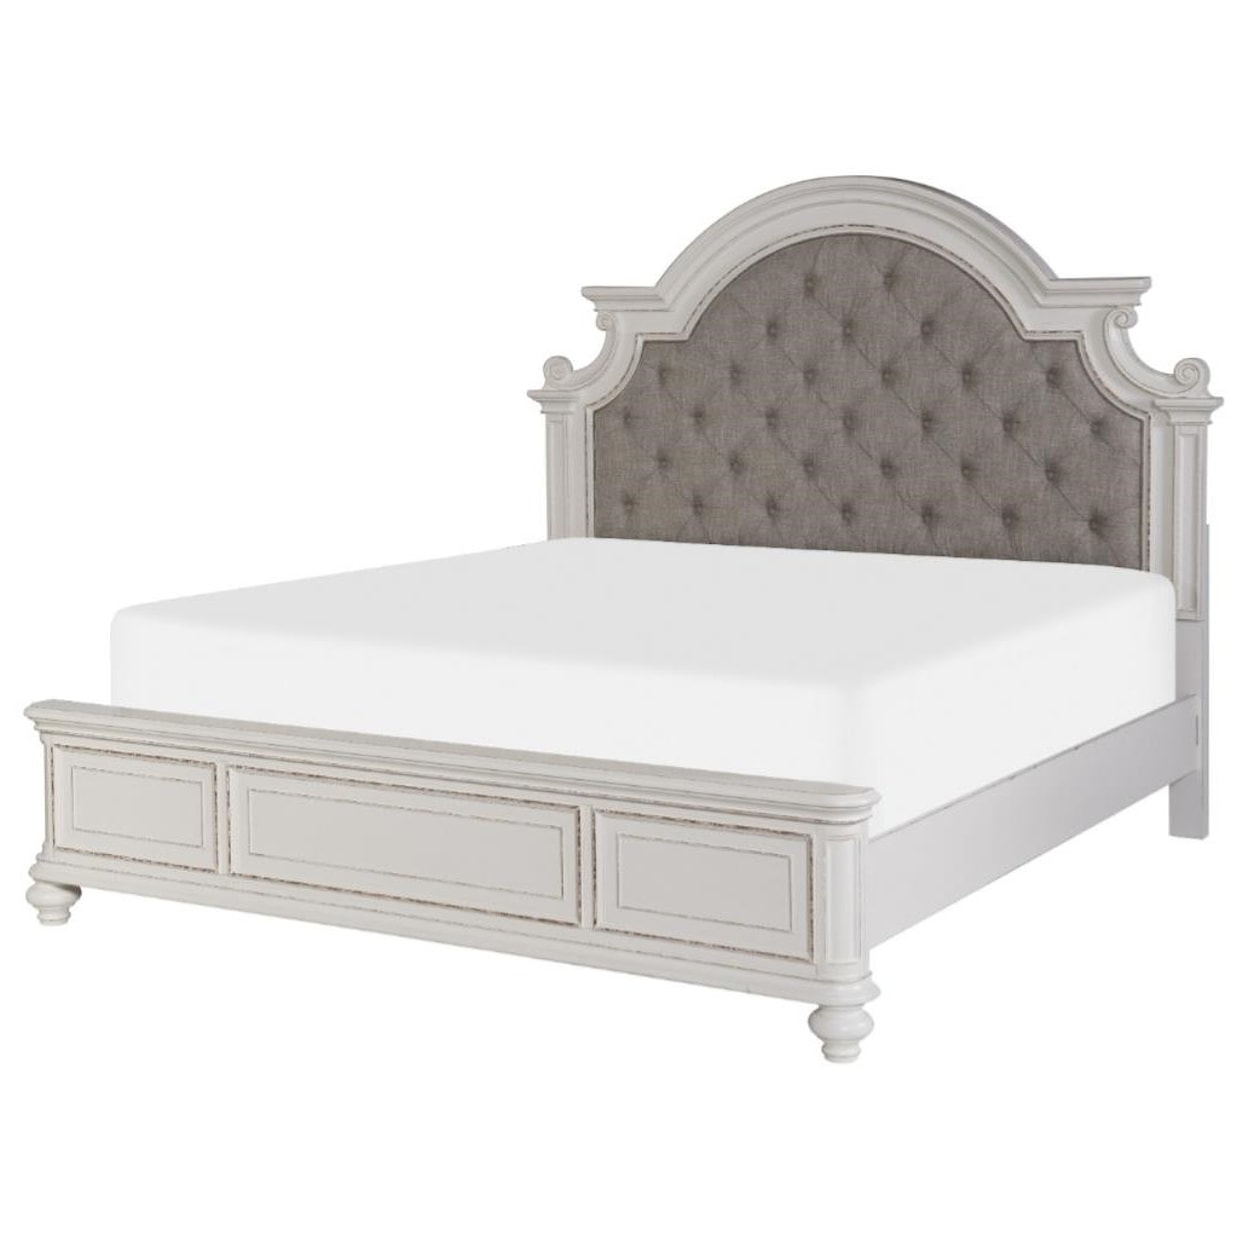 Homelegance Baylesford California King Upholstered Bed